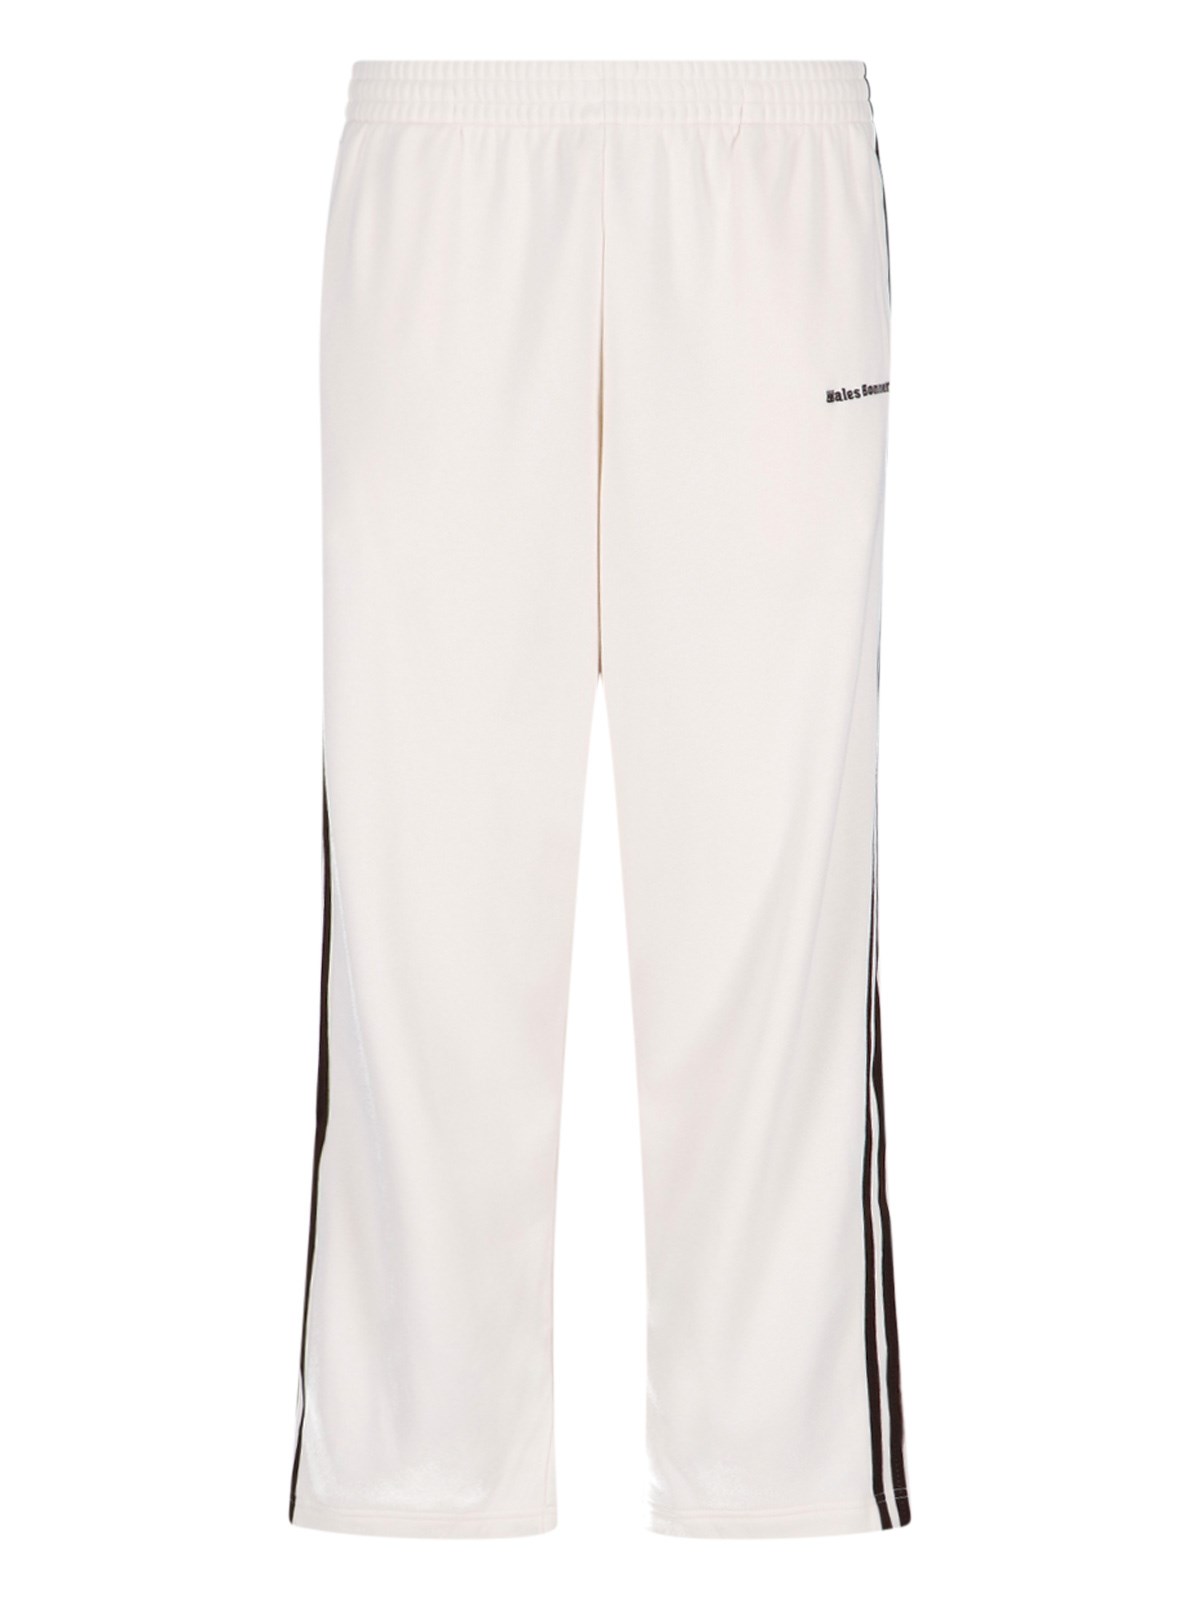 Shop Adidas X Wales Bonner Logo Track Pants In White